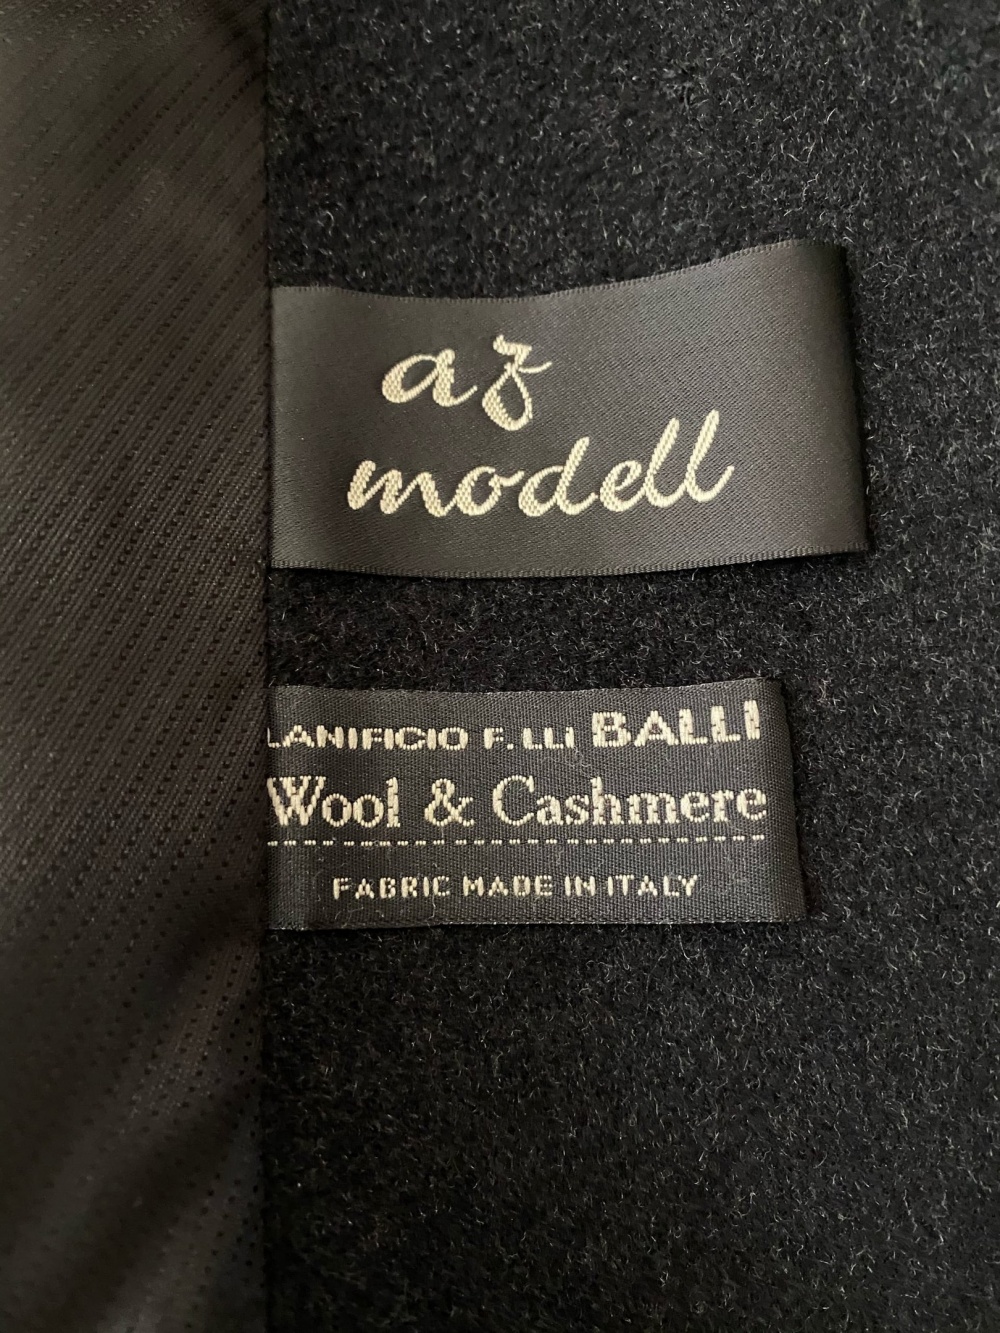 Пальто Lanificio FLii Balli, размер 46-48